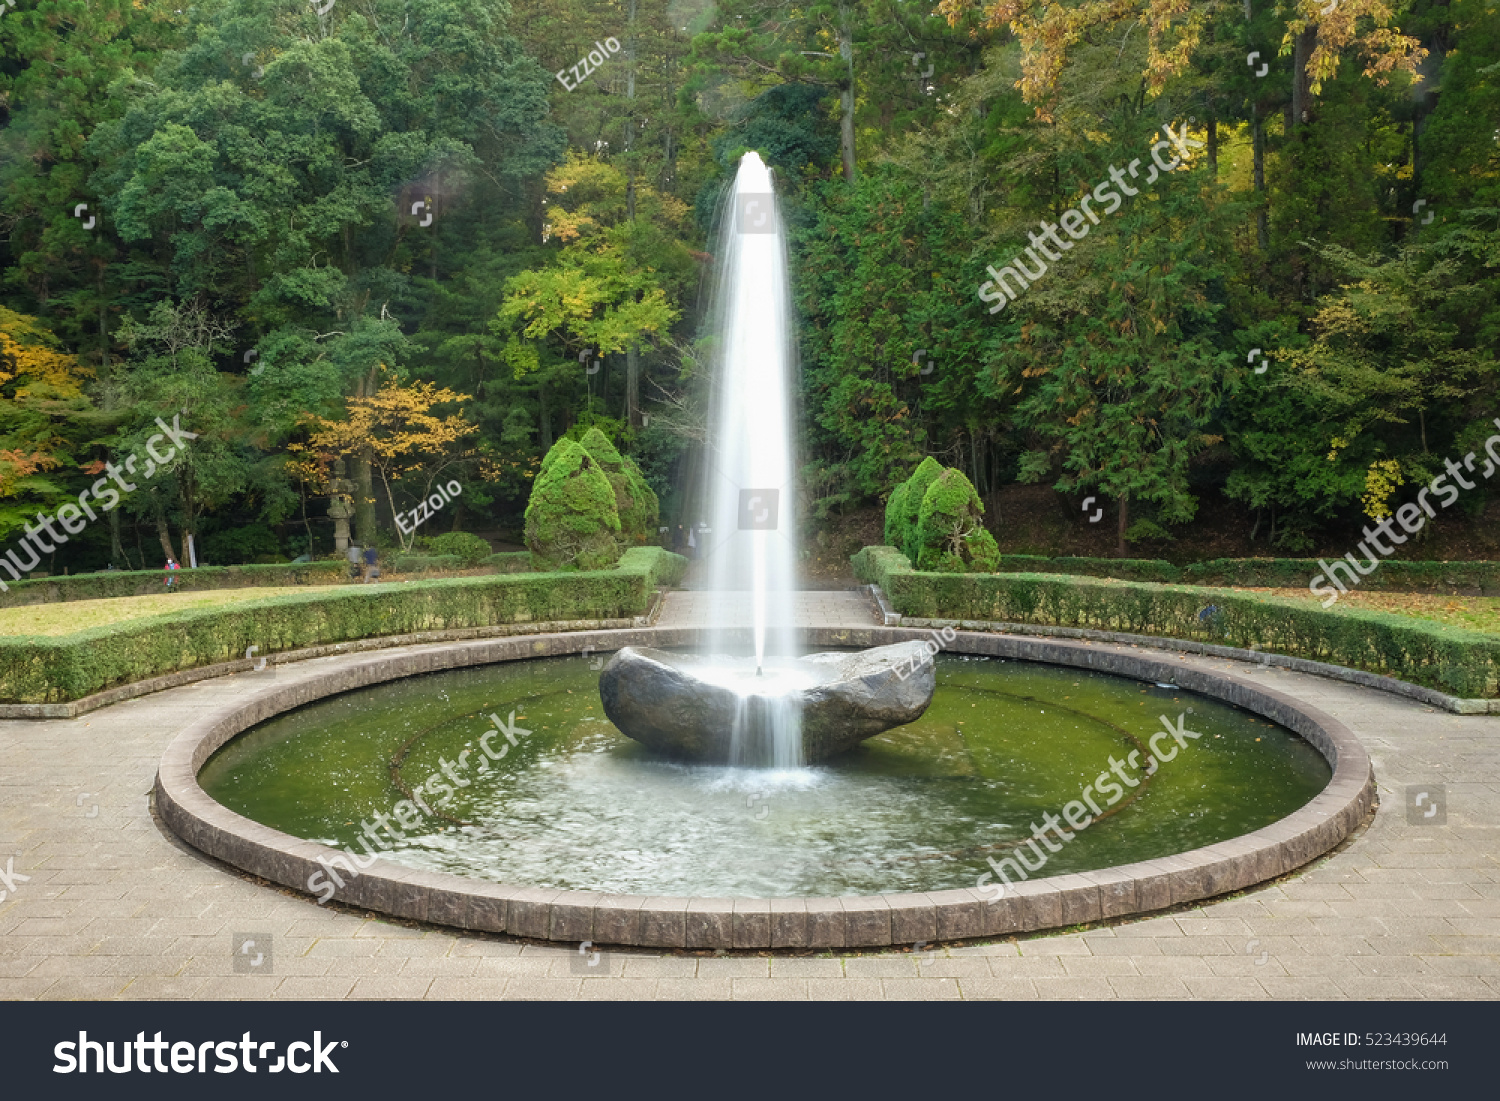 The fountain in japanese garden. #523439644